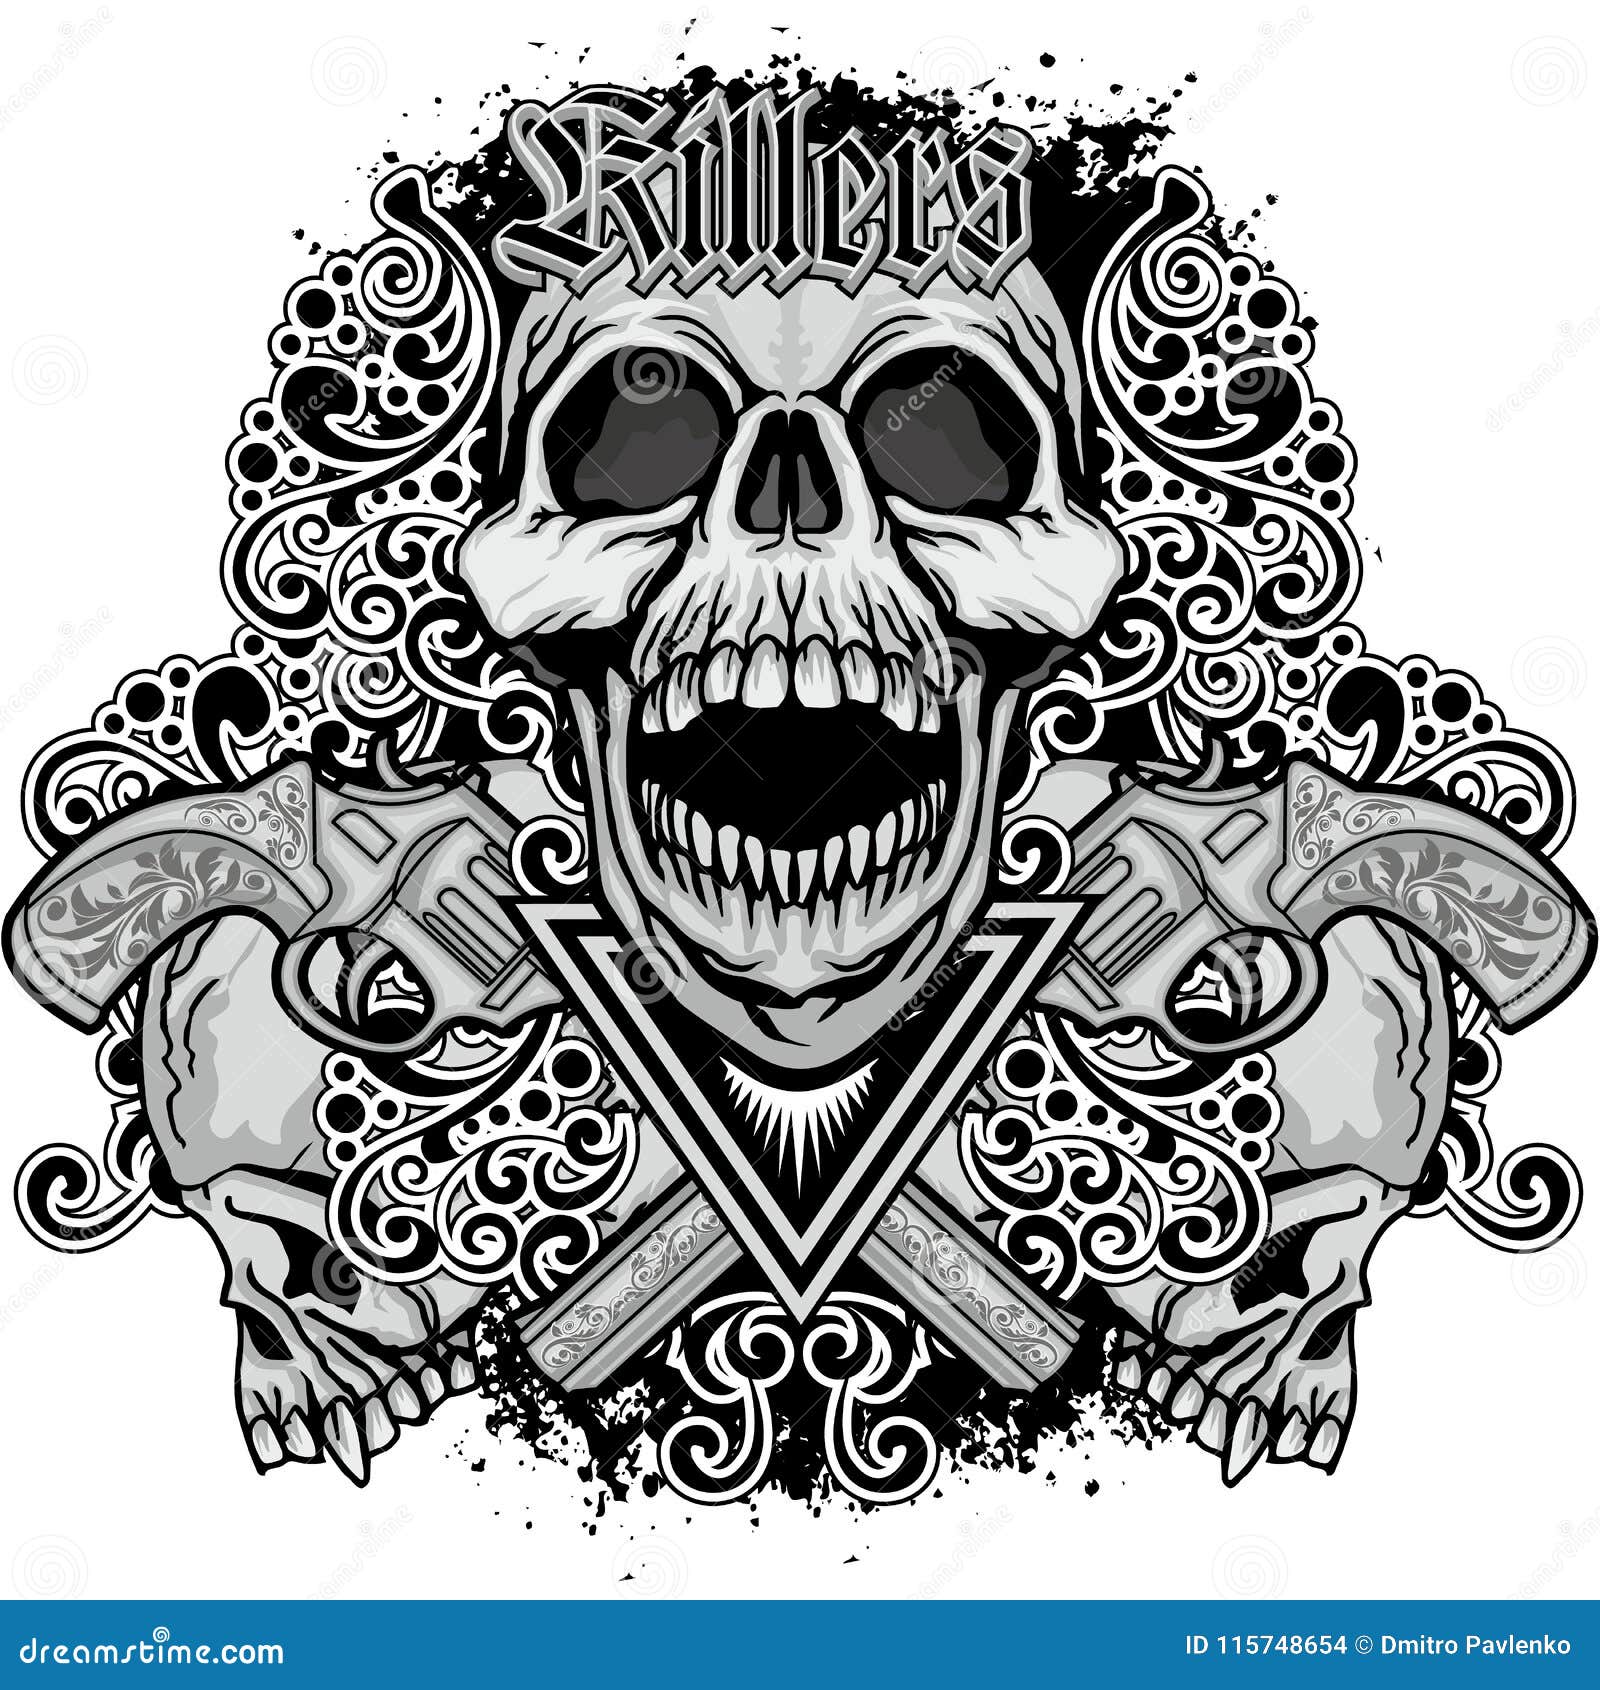 Grunge skull coat of arms stock illustration. Illustration of black ...